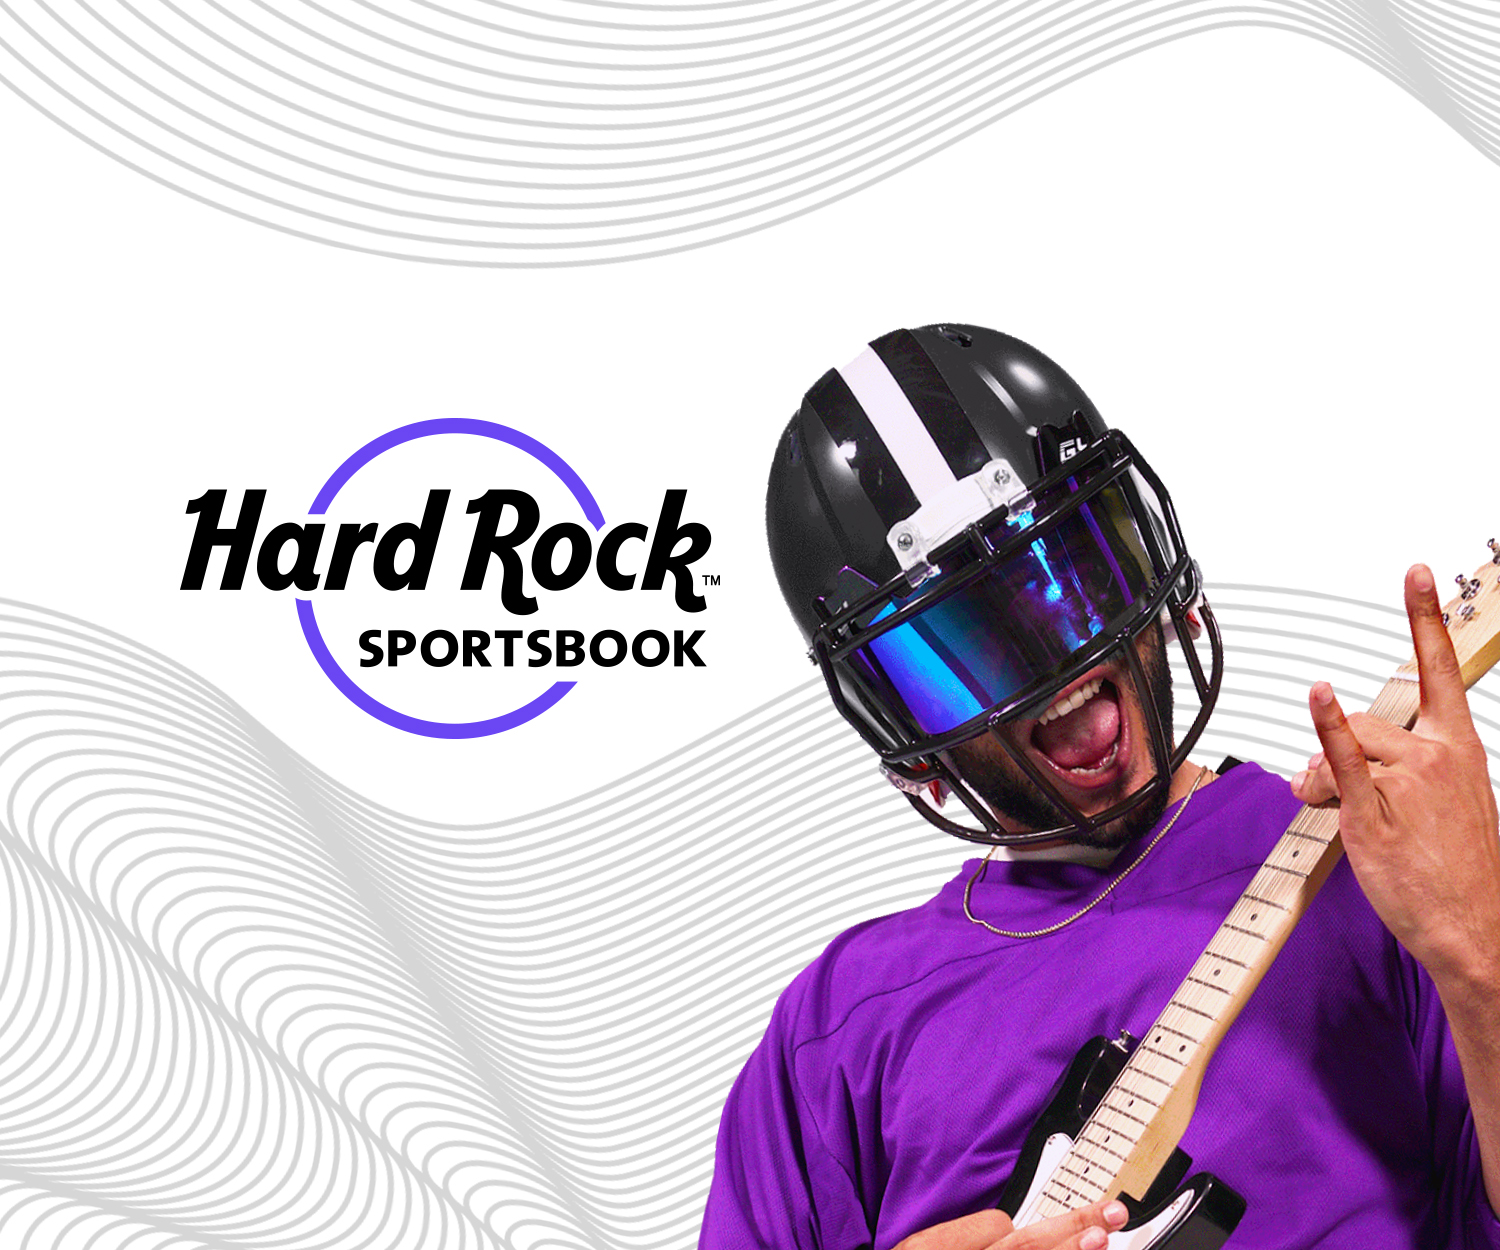 Hard Rock Sportsbook Now Live in Virginia